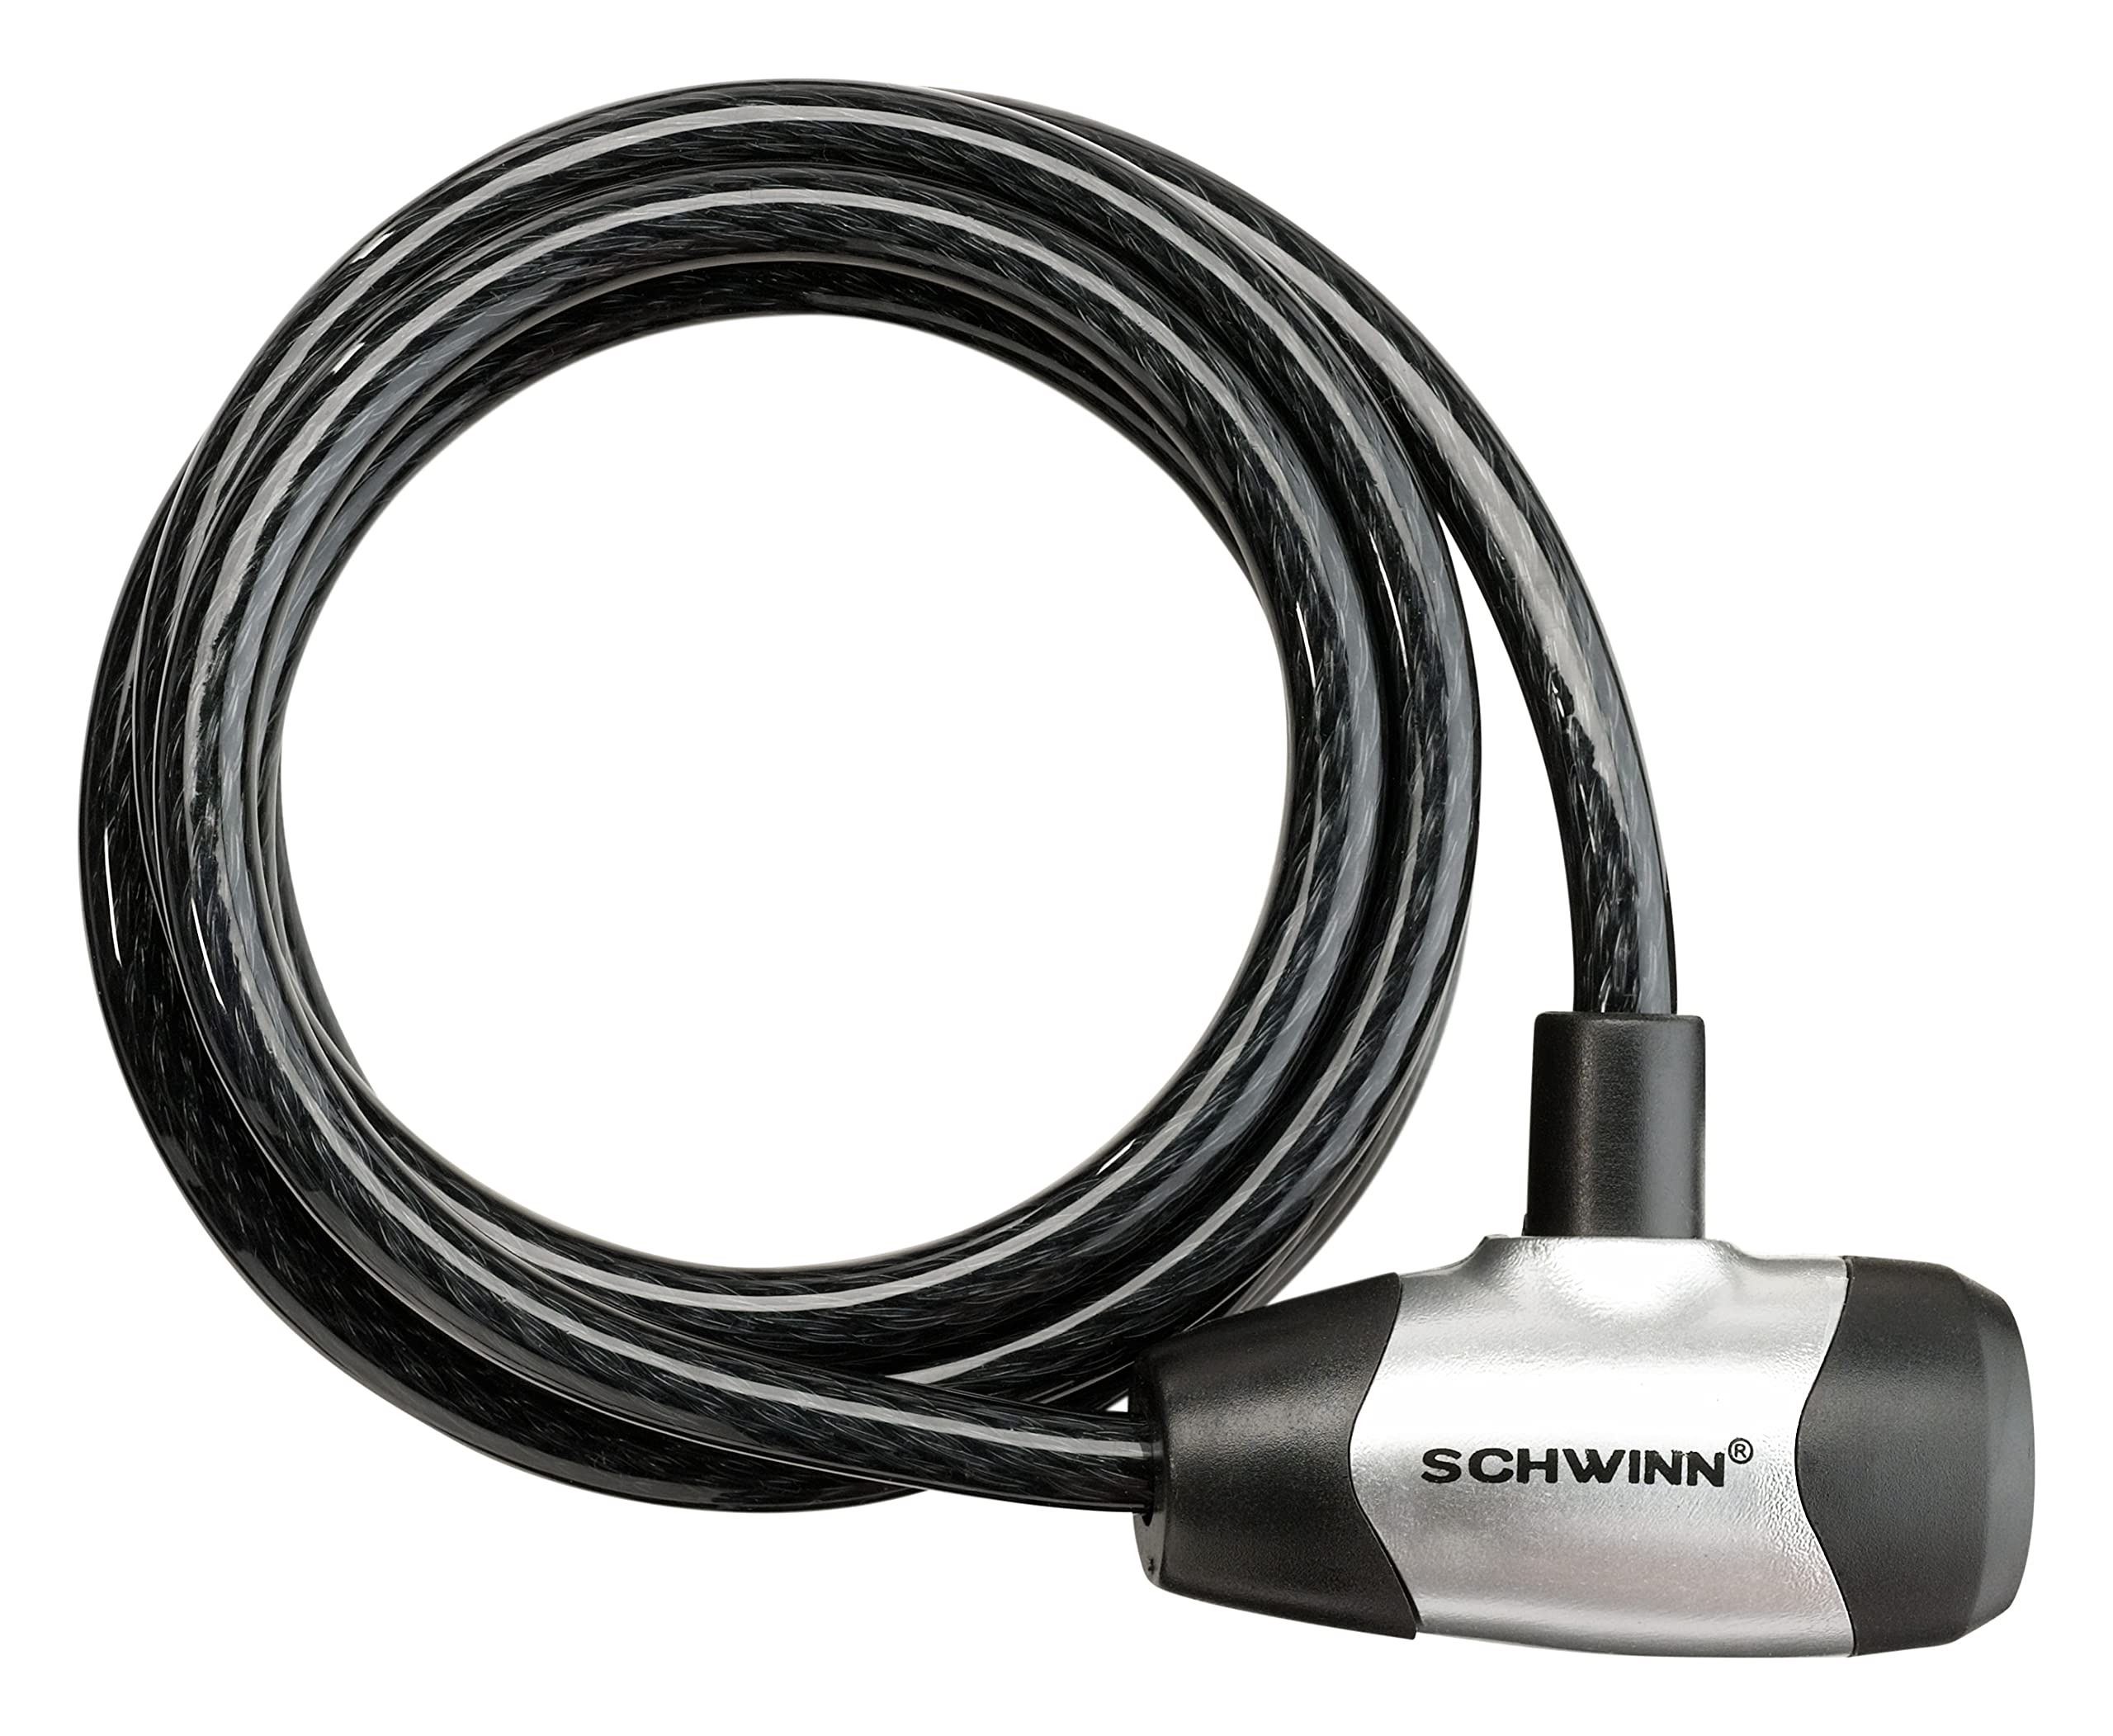 Schwinn Bike Key Lock in Braided Steel Cable, 2 Keys Included, 6 feet x 8mm Anti Theft Bicycle Lock, Security Level 1